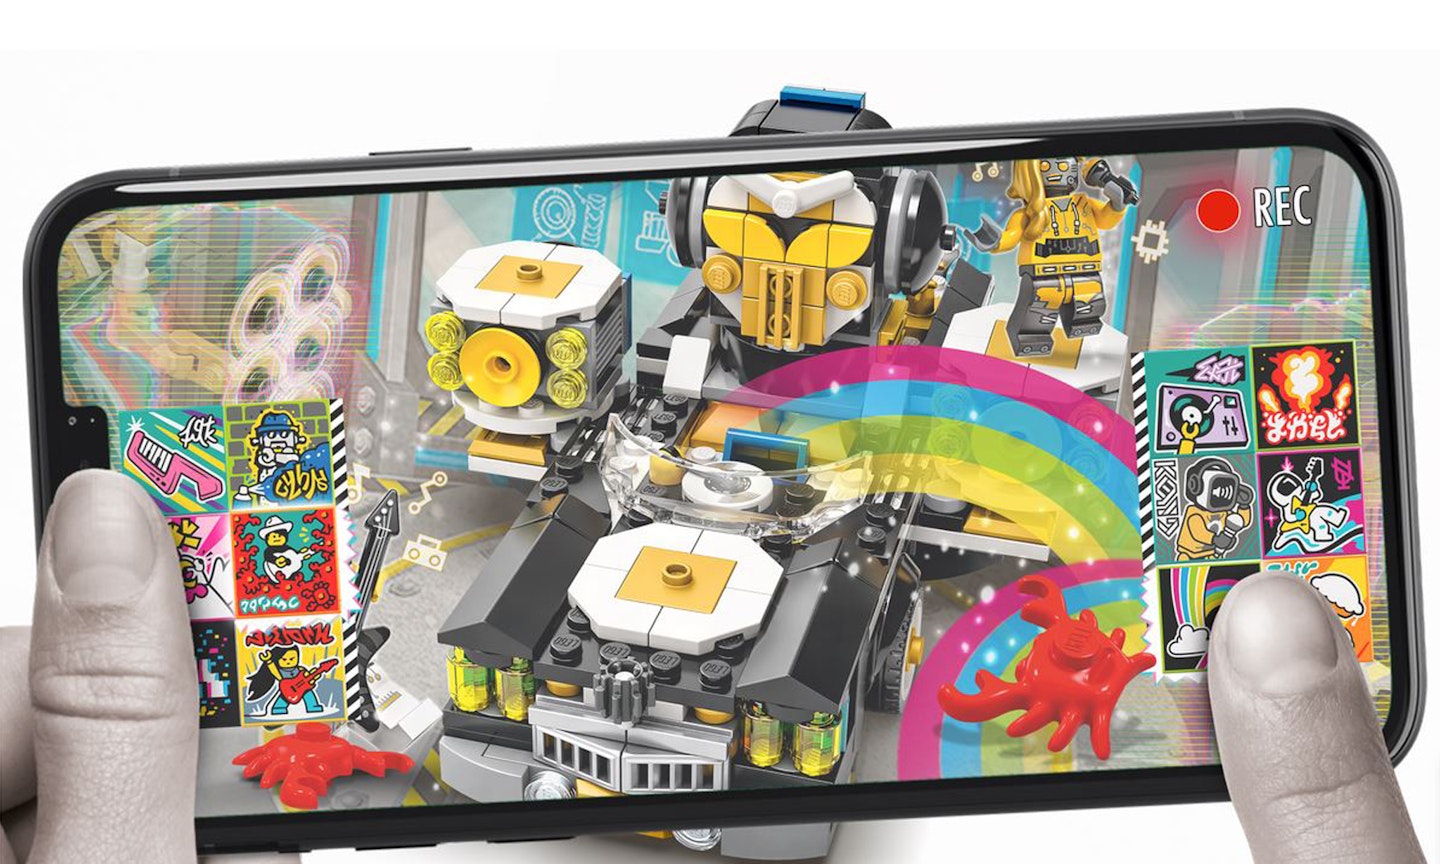 Lego Vidiyo Robo HipHop Car and app